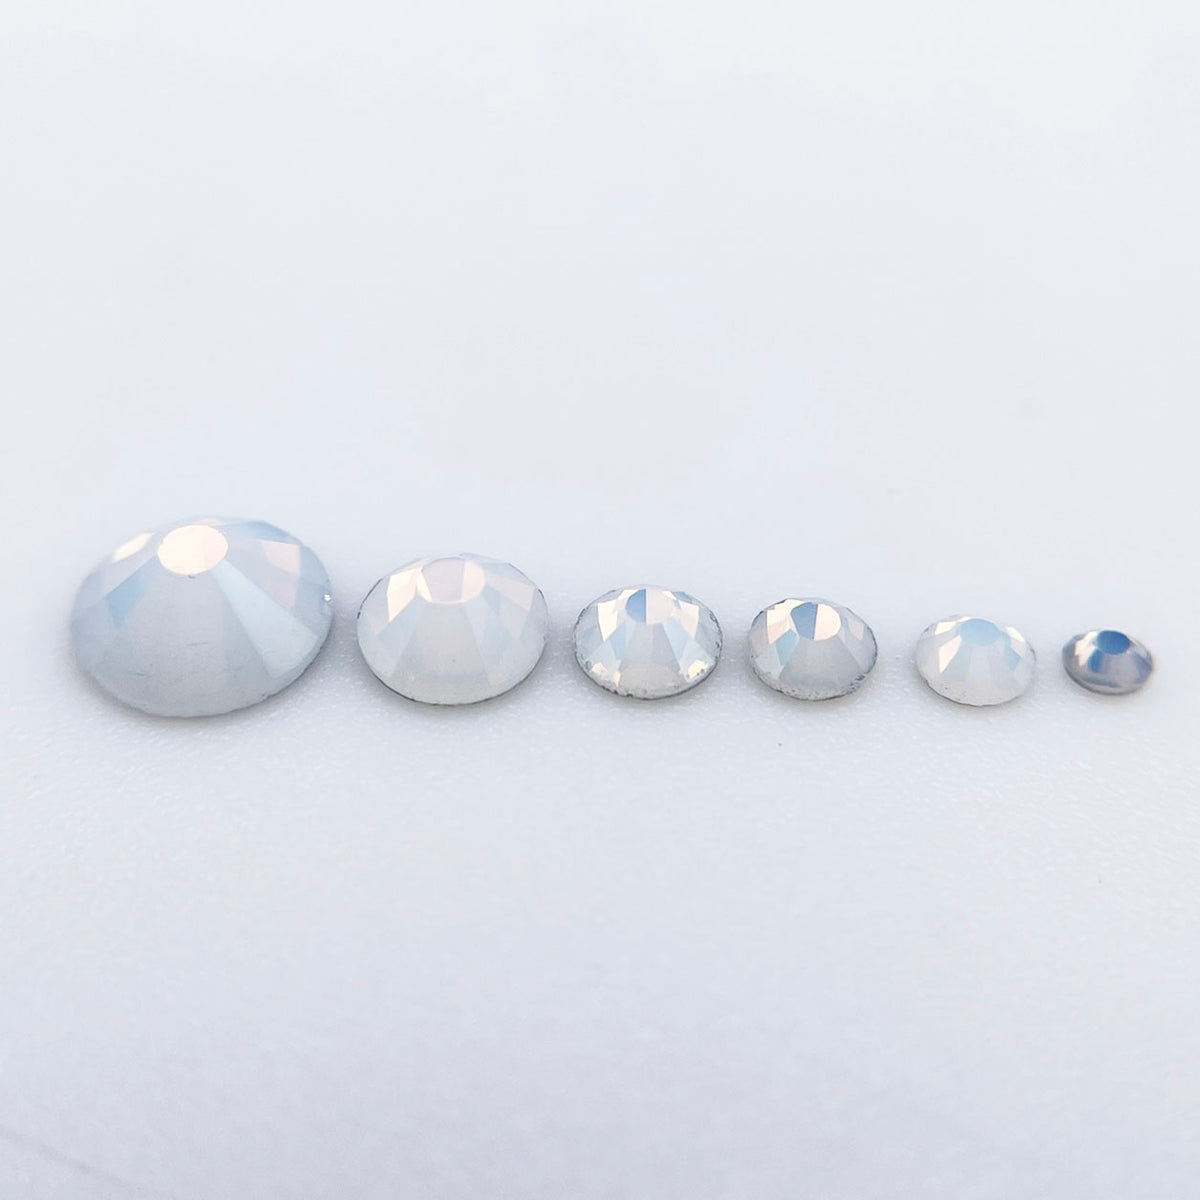 LUXE® White Opal Hotfix Glass Rhinestones - Fast Shipping – Be Createful